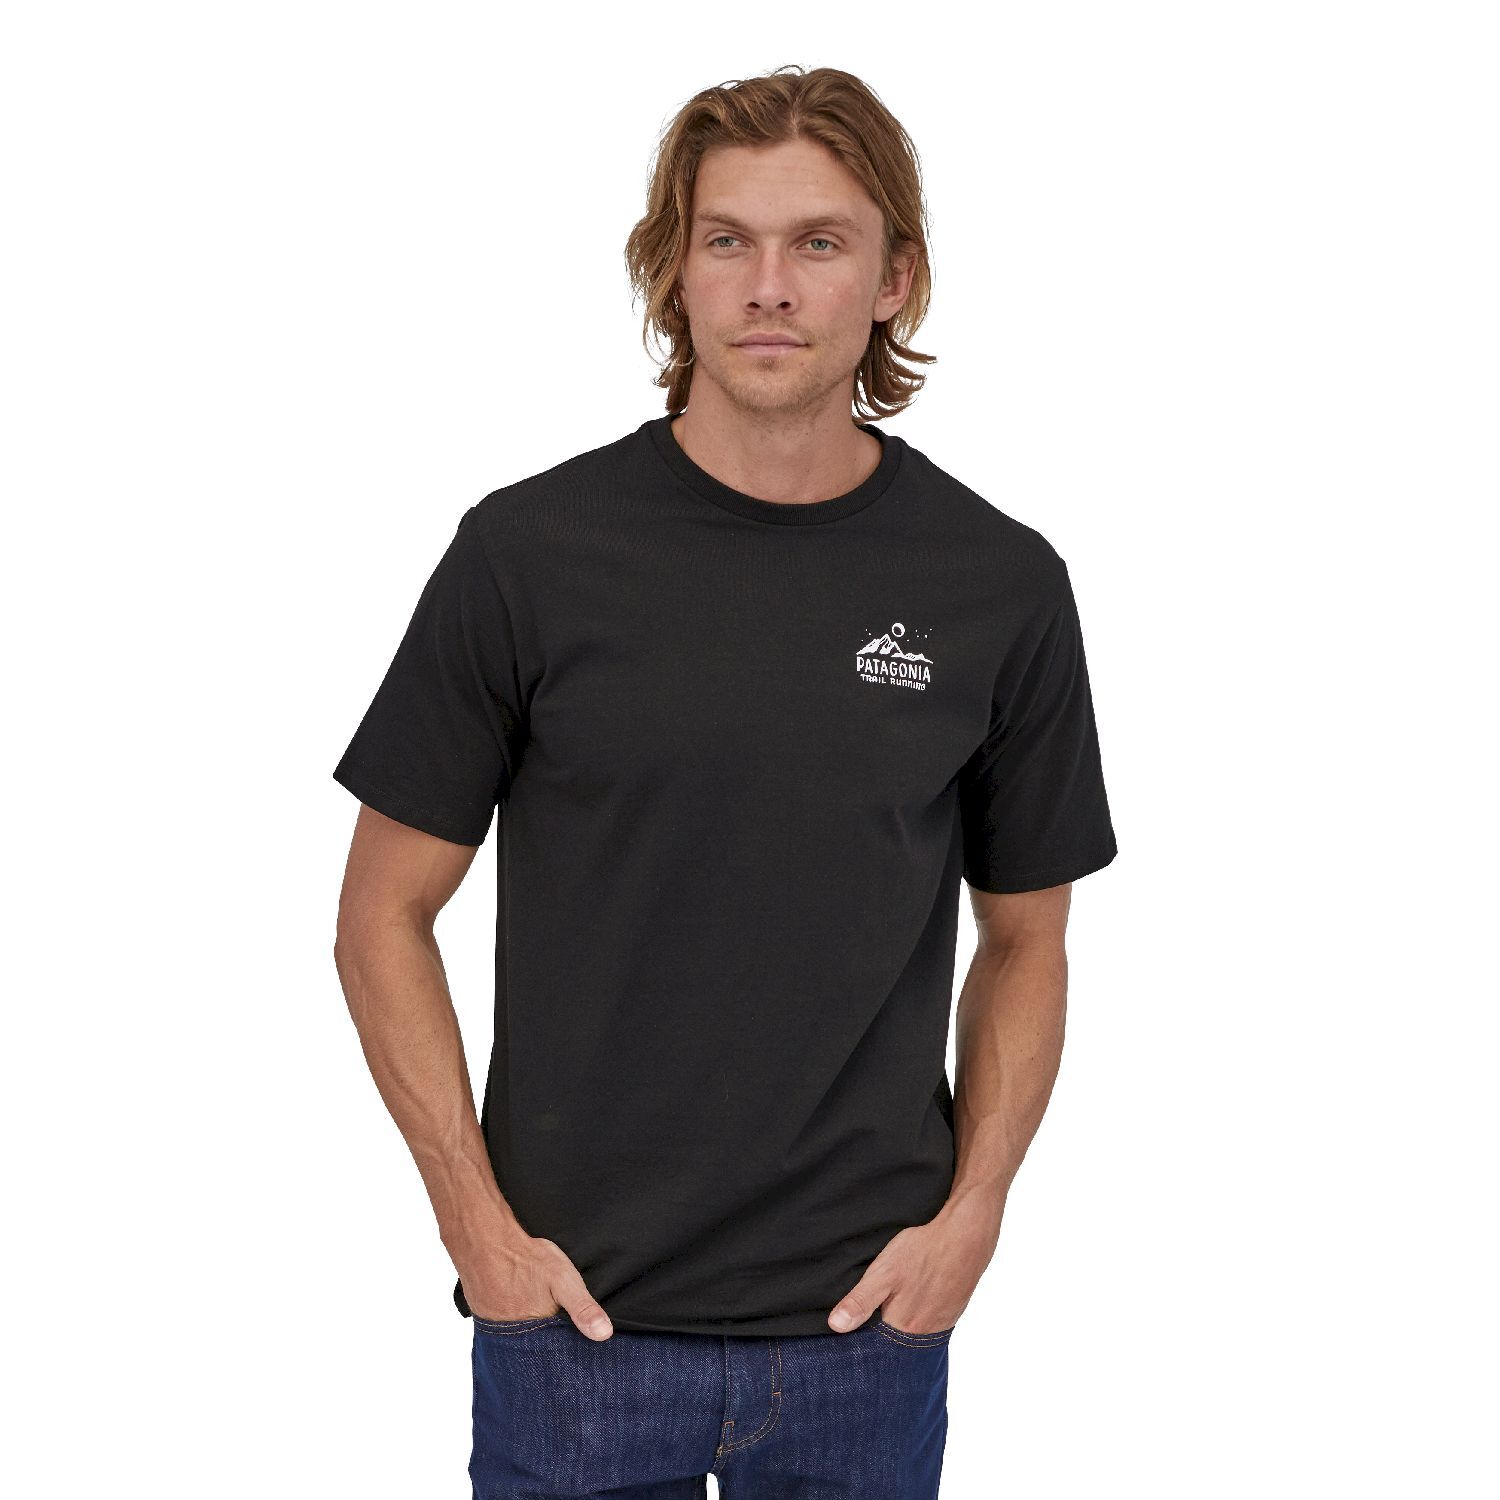 Patagonia Ridgeline Runner Responsibili-Tee - T-shirt Herr